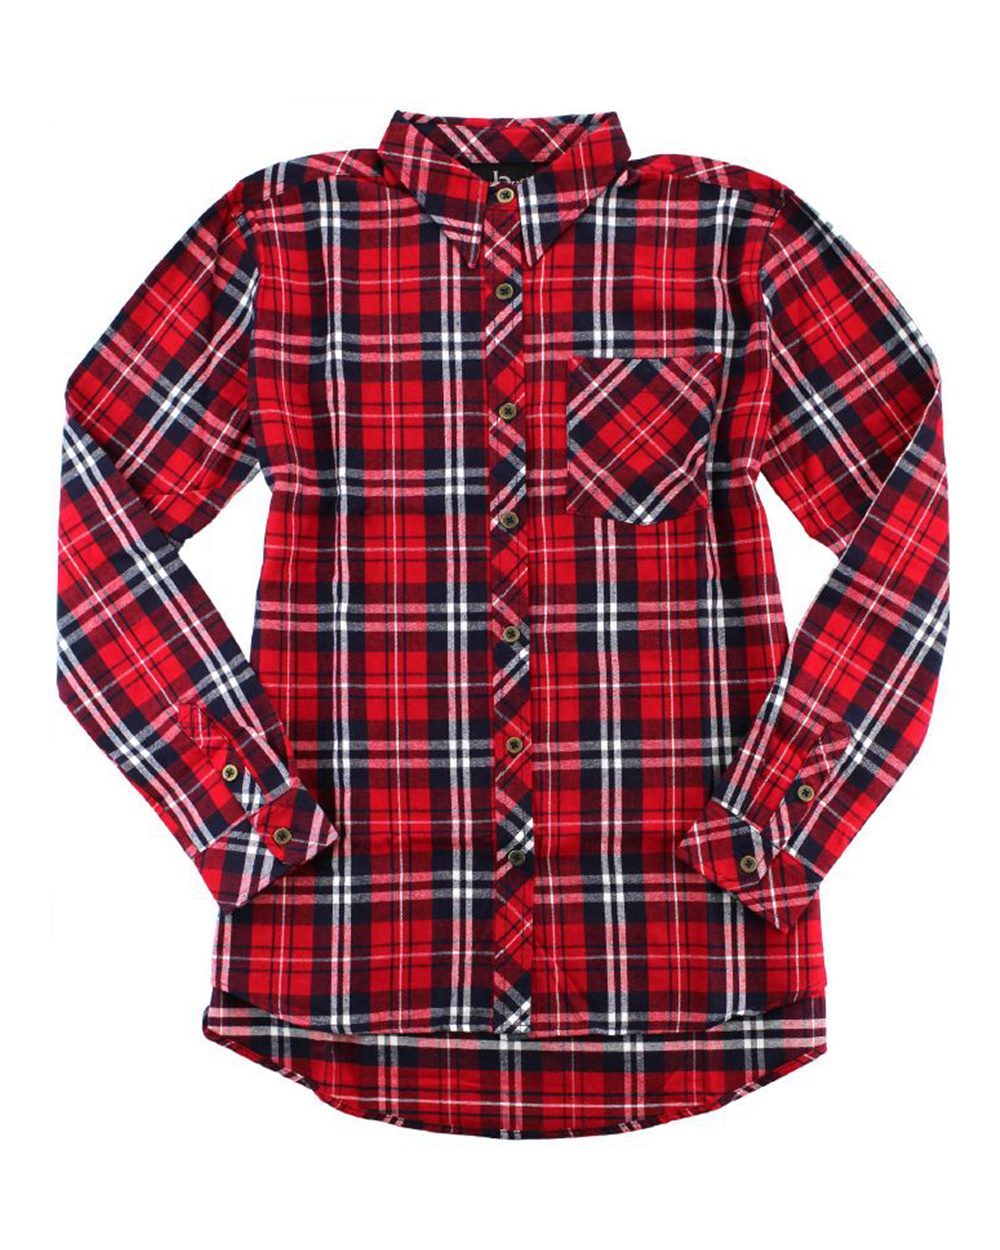 Boxercraft F50 - Women's Flannel Shirt $26.72